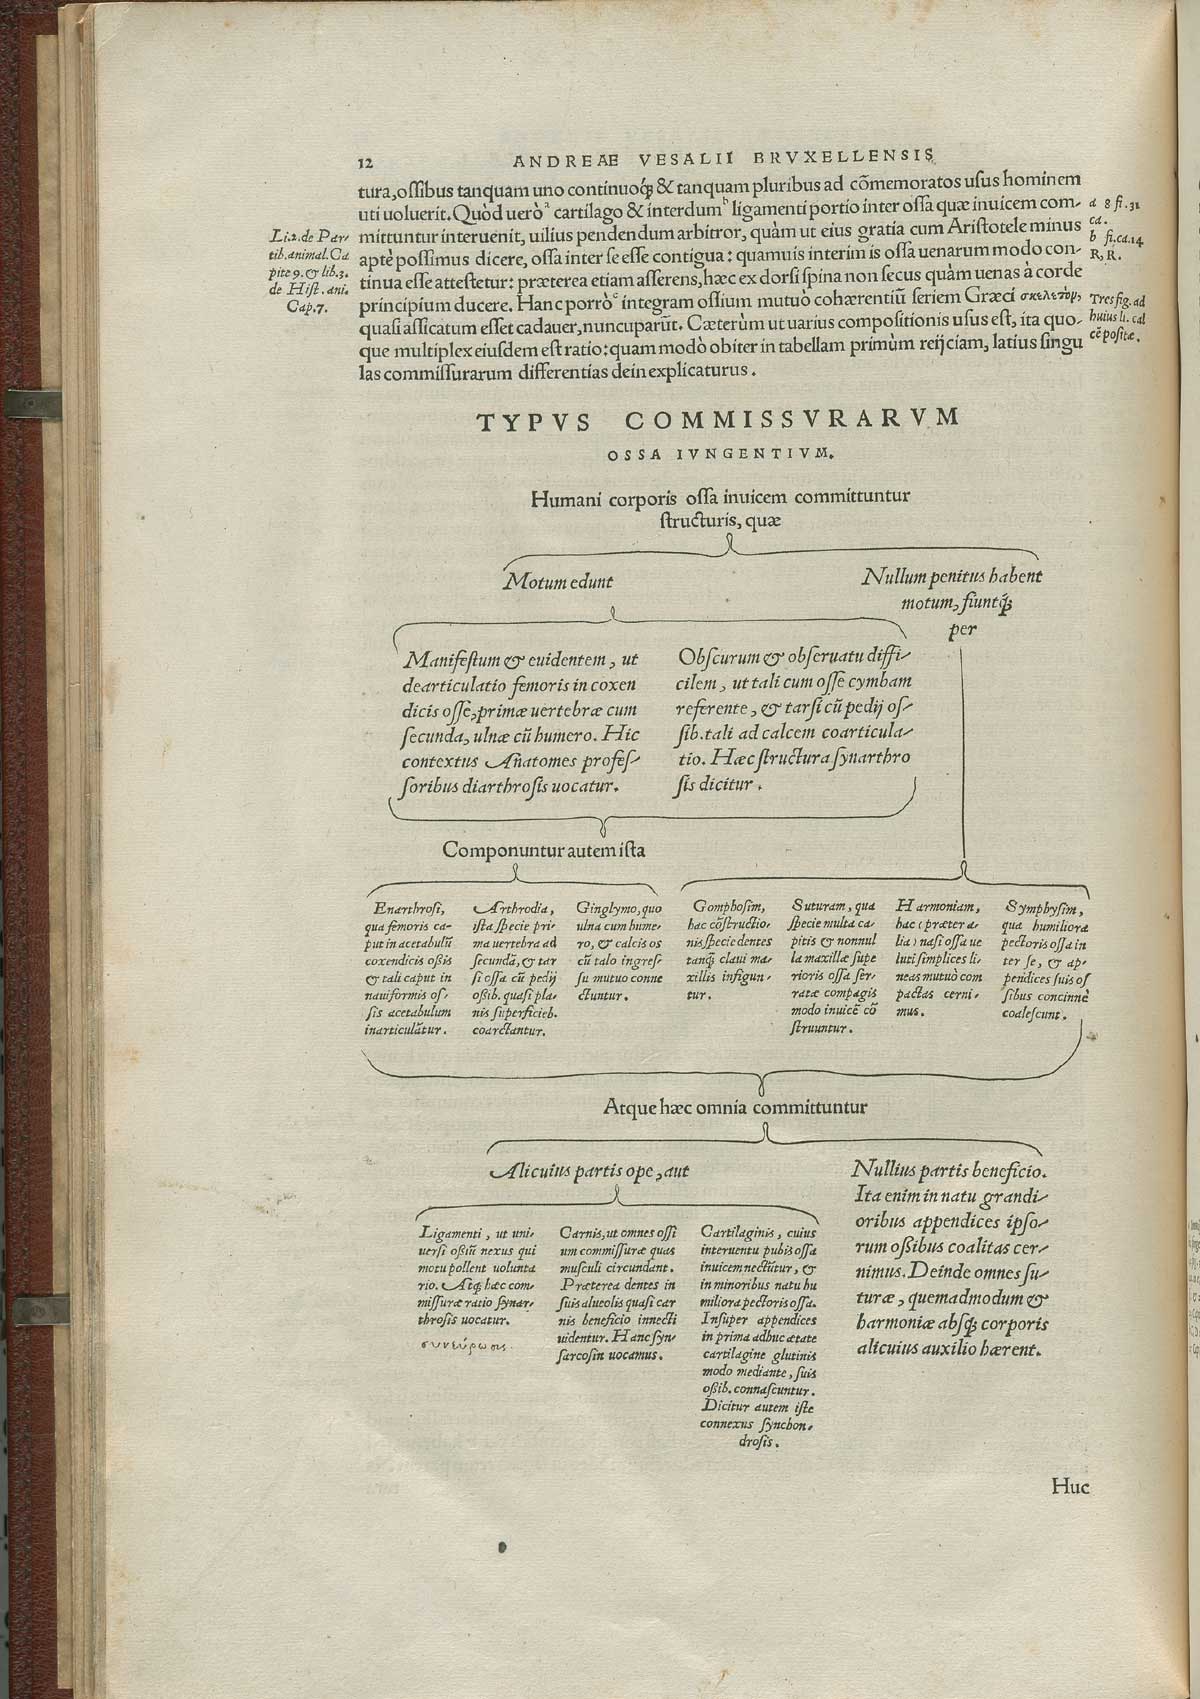 Page 12 of Andreas Vesalius' De corporis humani fabrica libri septem, featuring the types of bone structions.